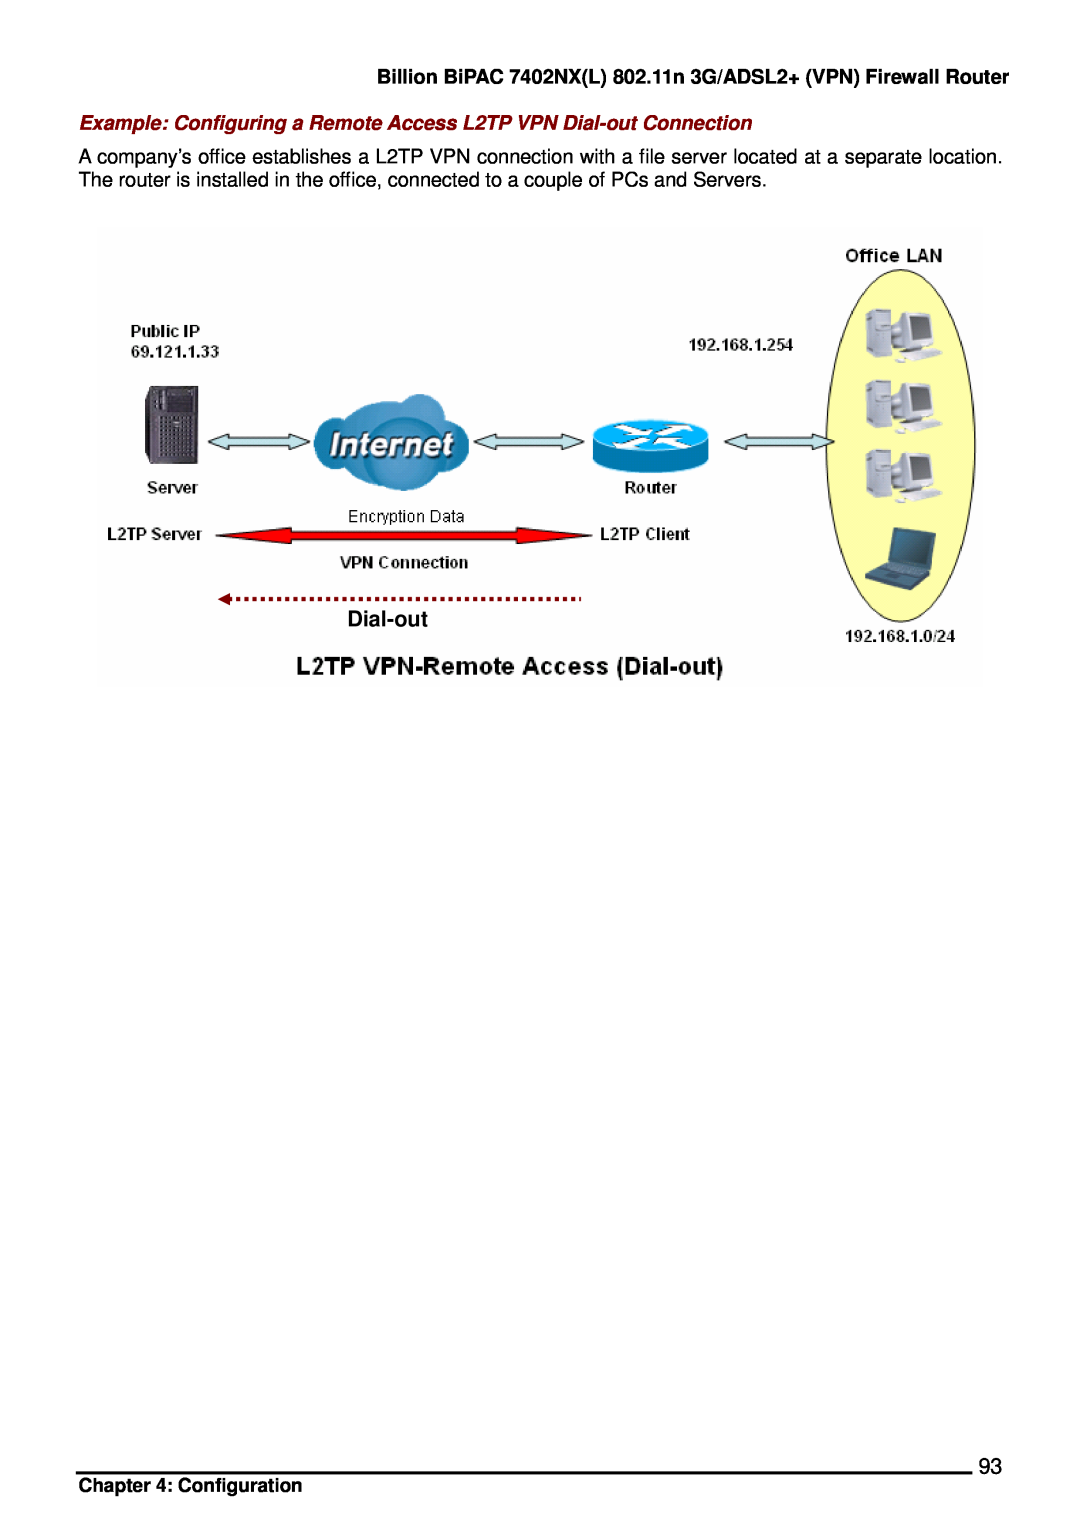 Billion Electric Company Dial-out, Billion BiPAC 7402NXL 802.11n 3G/ADSL2+ VPN Firewall Router, Configuration 